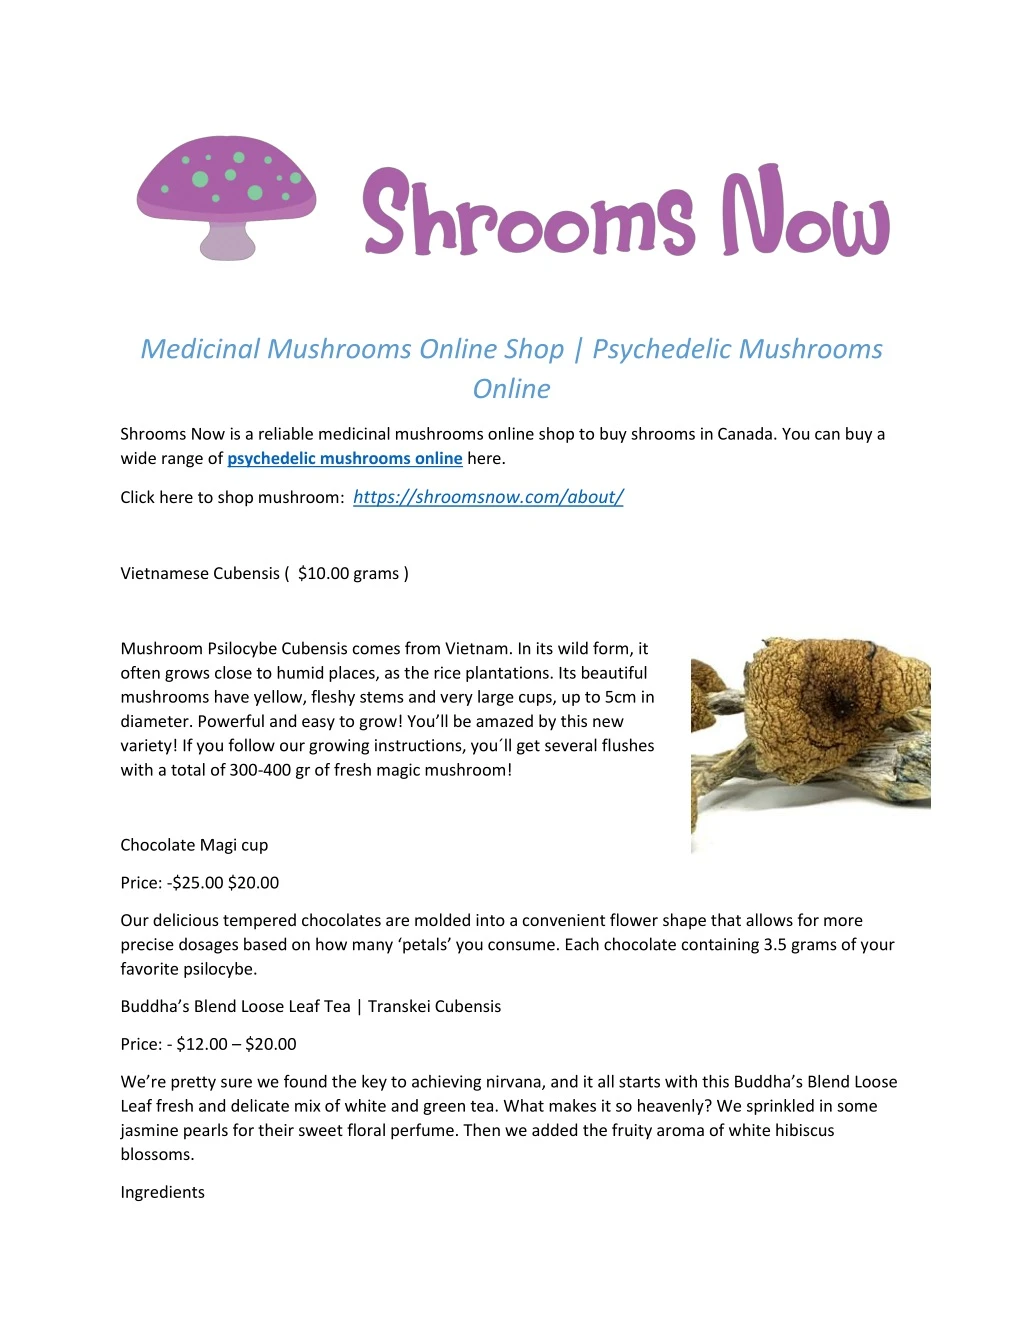 medicinal mushrooms online shop psychedelic